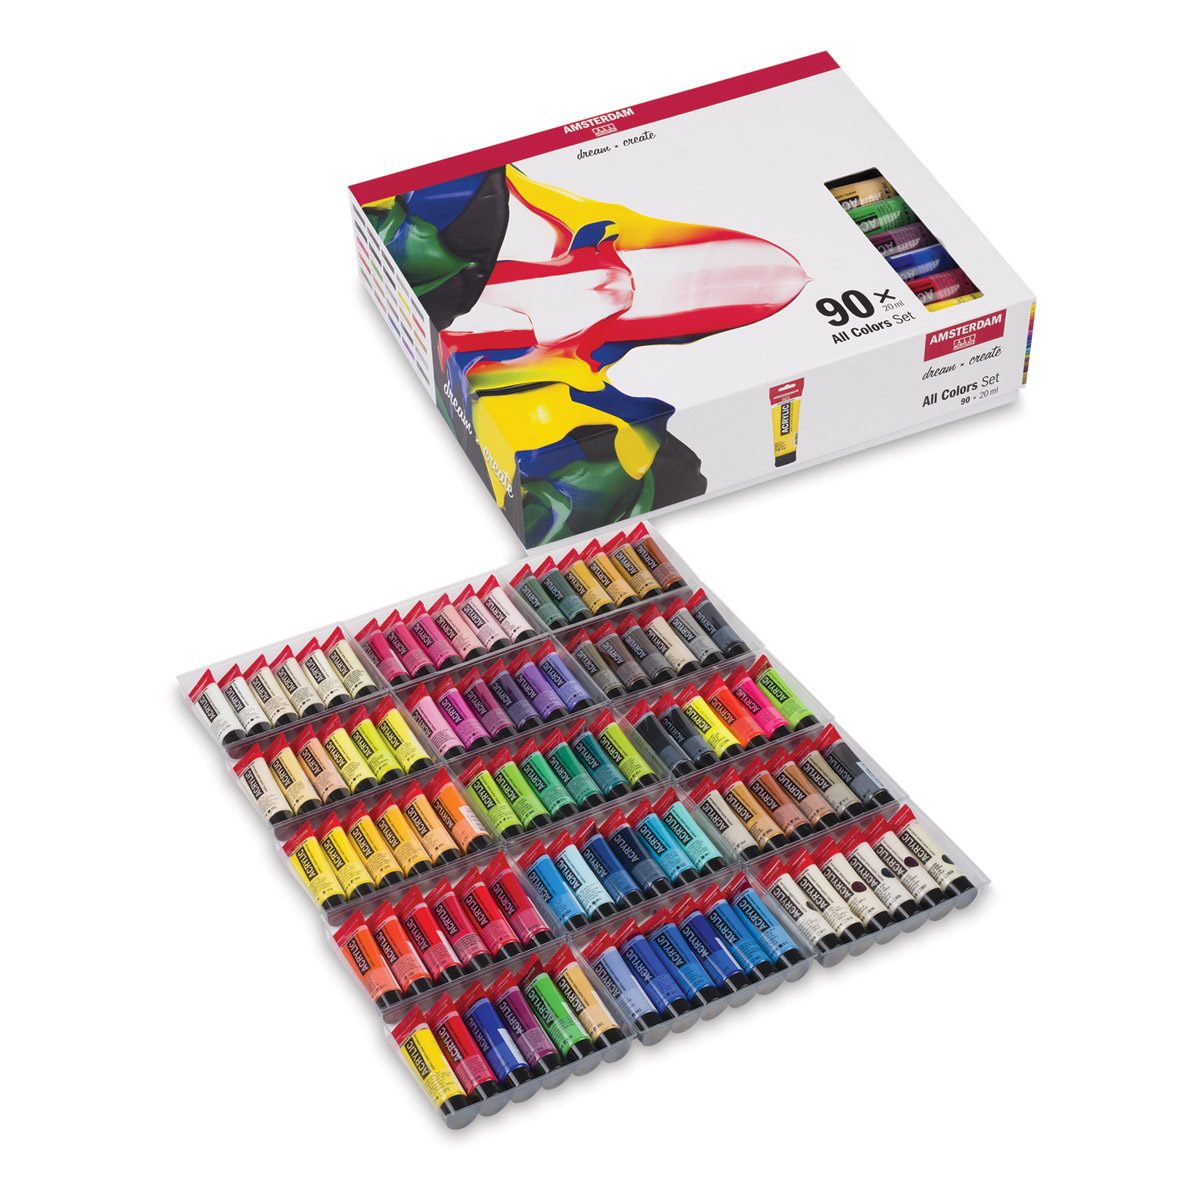 Amsterdam Standard Series Acrylic Paint Set, 20ml, 90-Colors